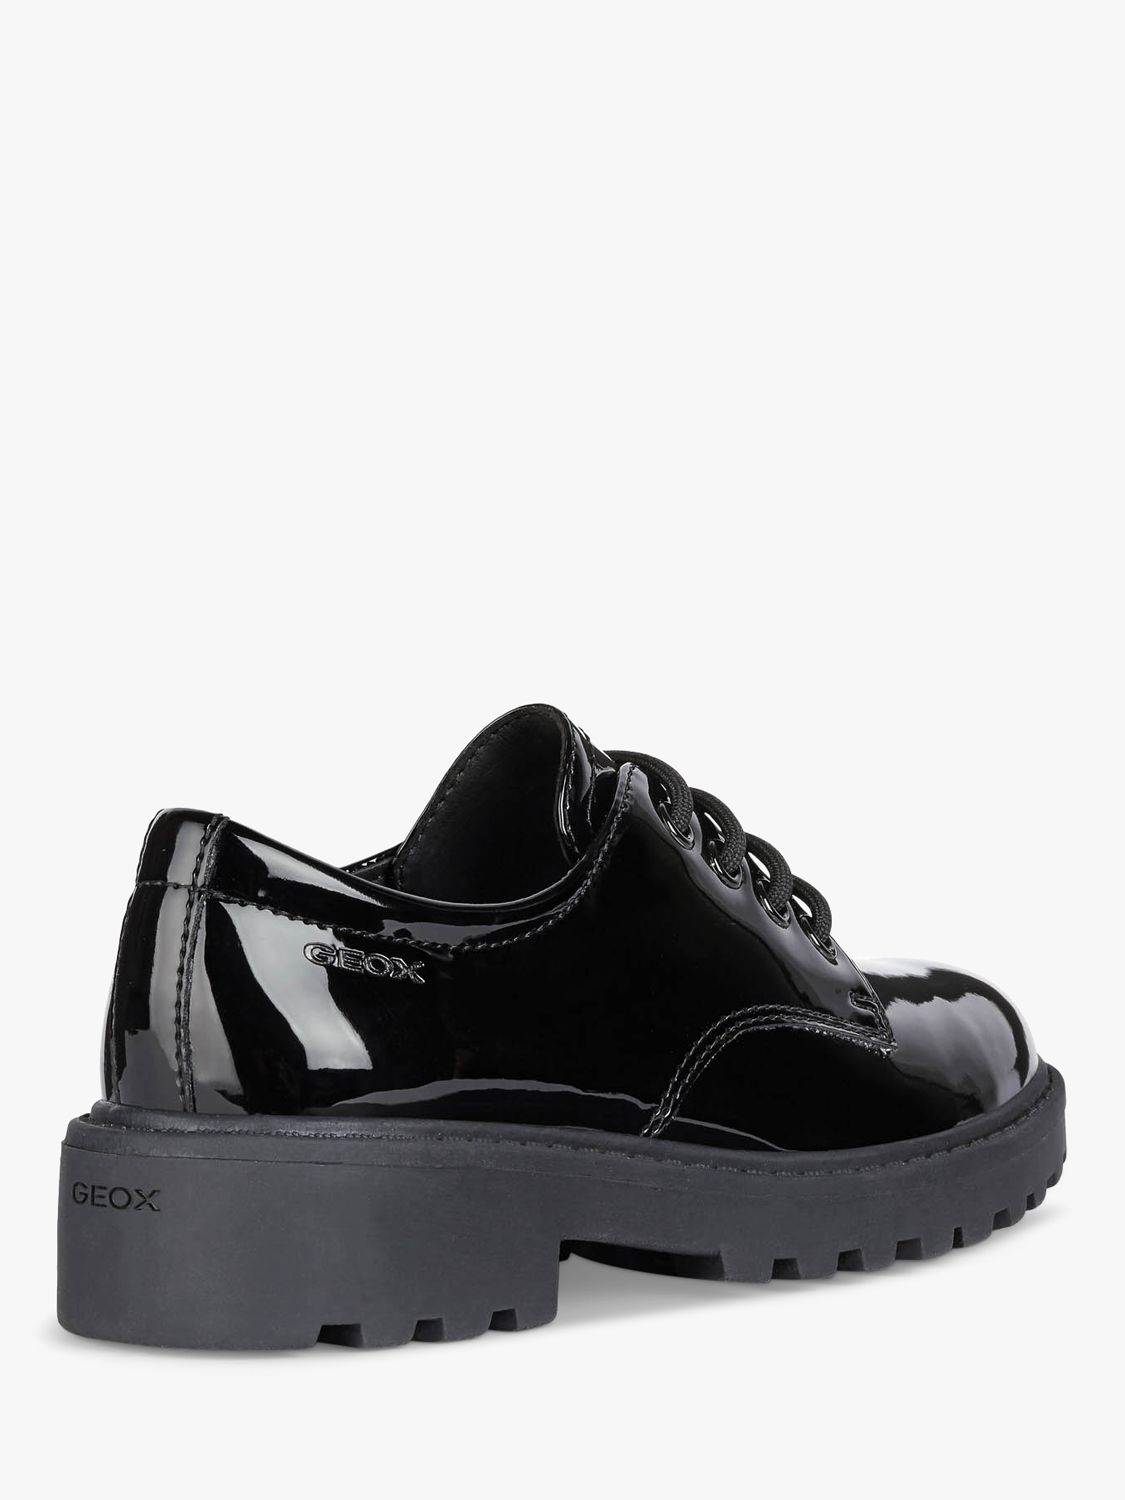 Geox Kids' Casey Faux Patent Leather Derby School Shoes, Black, EU40